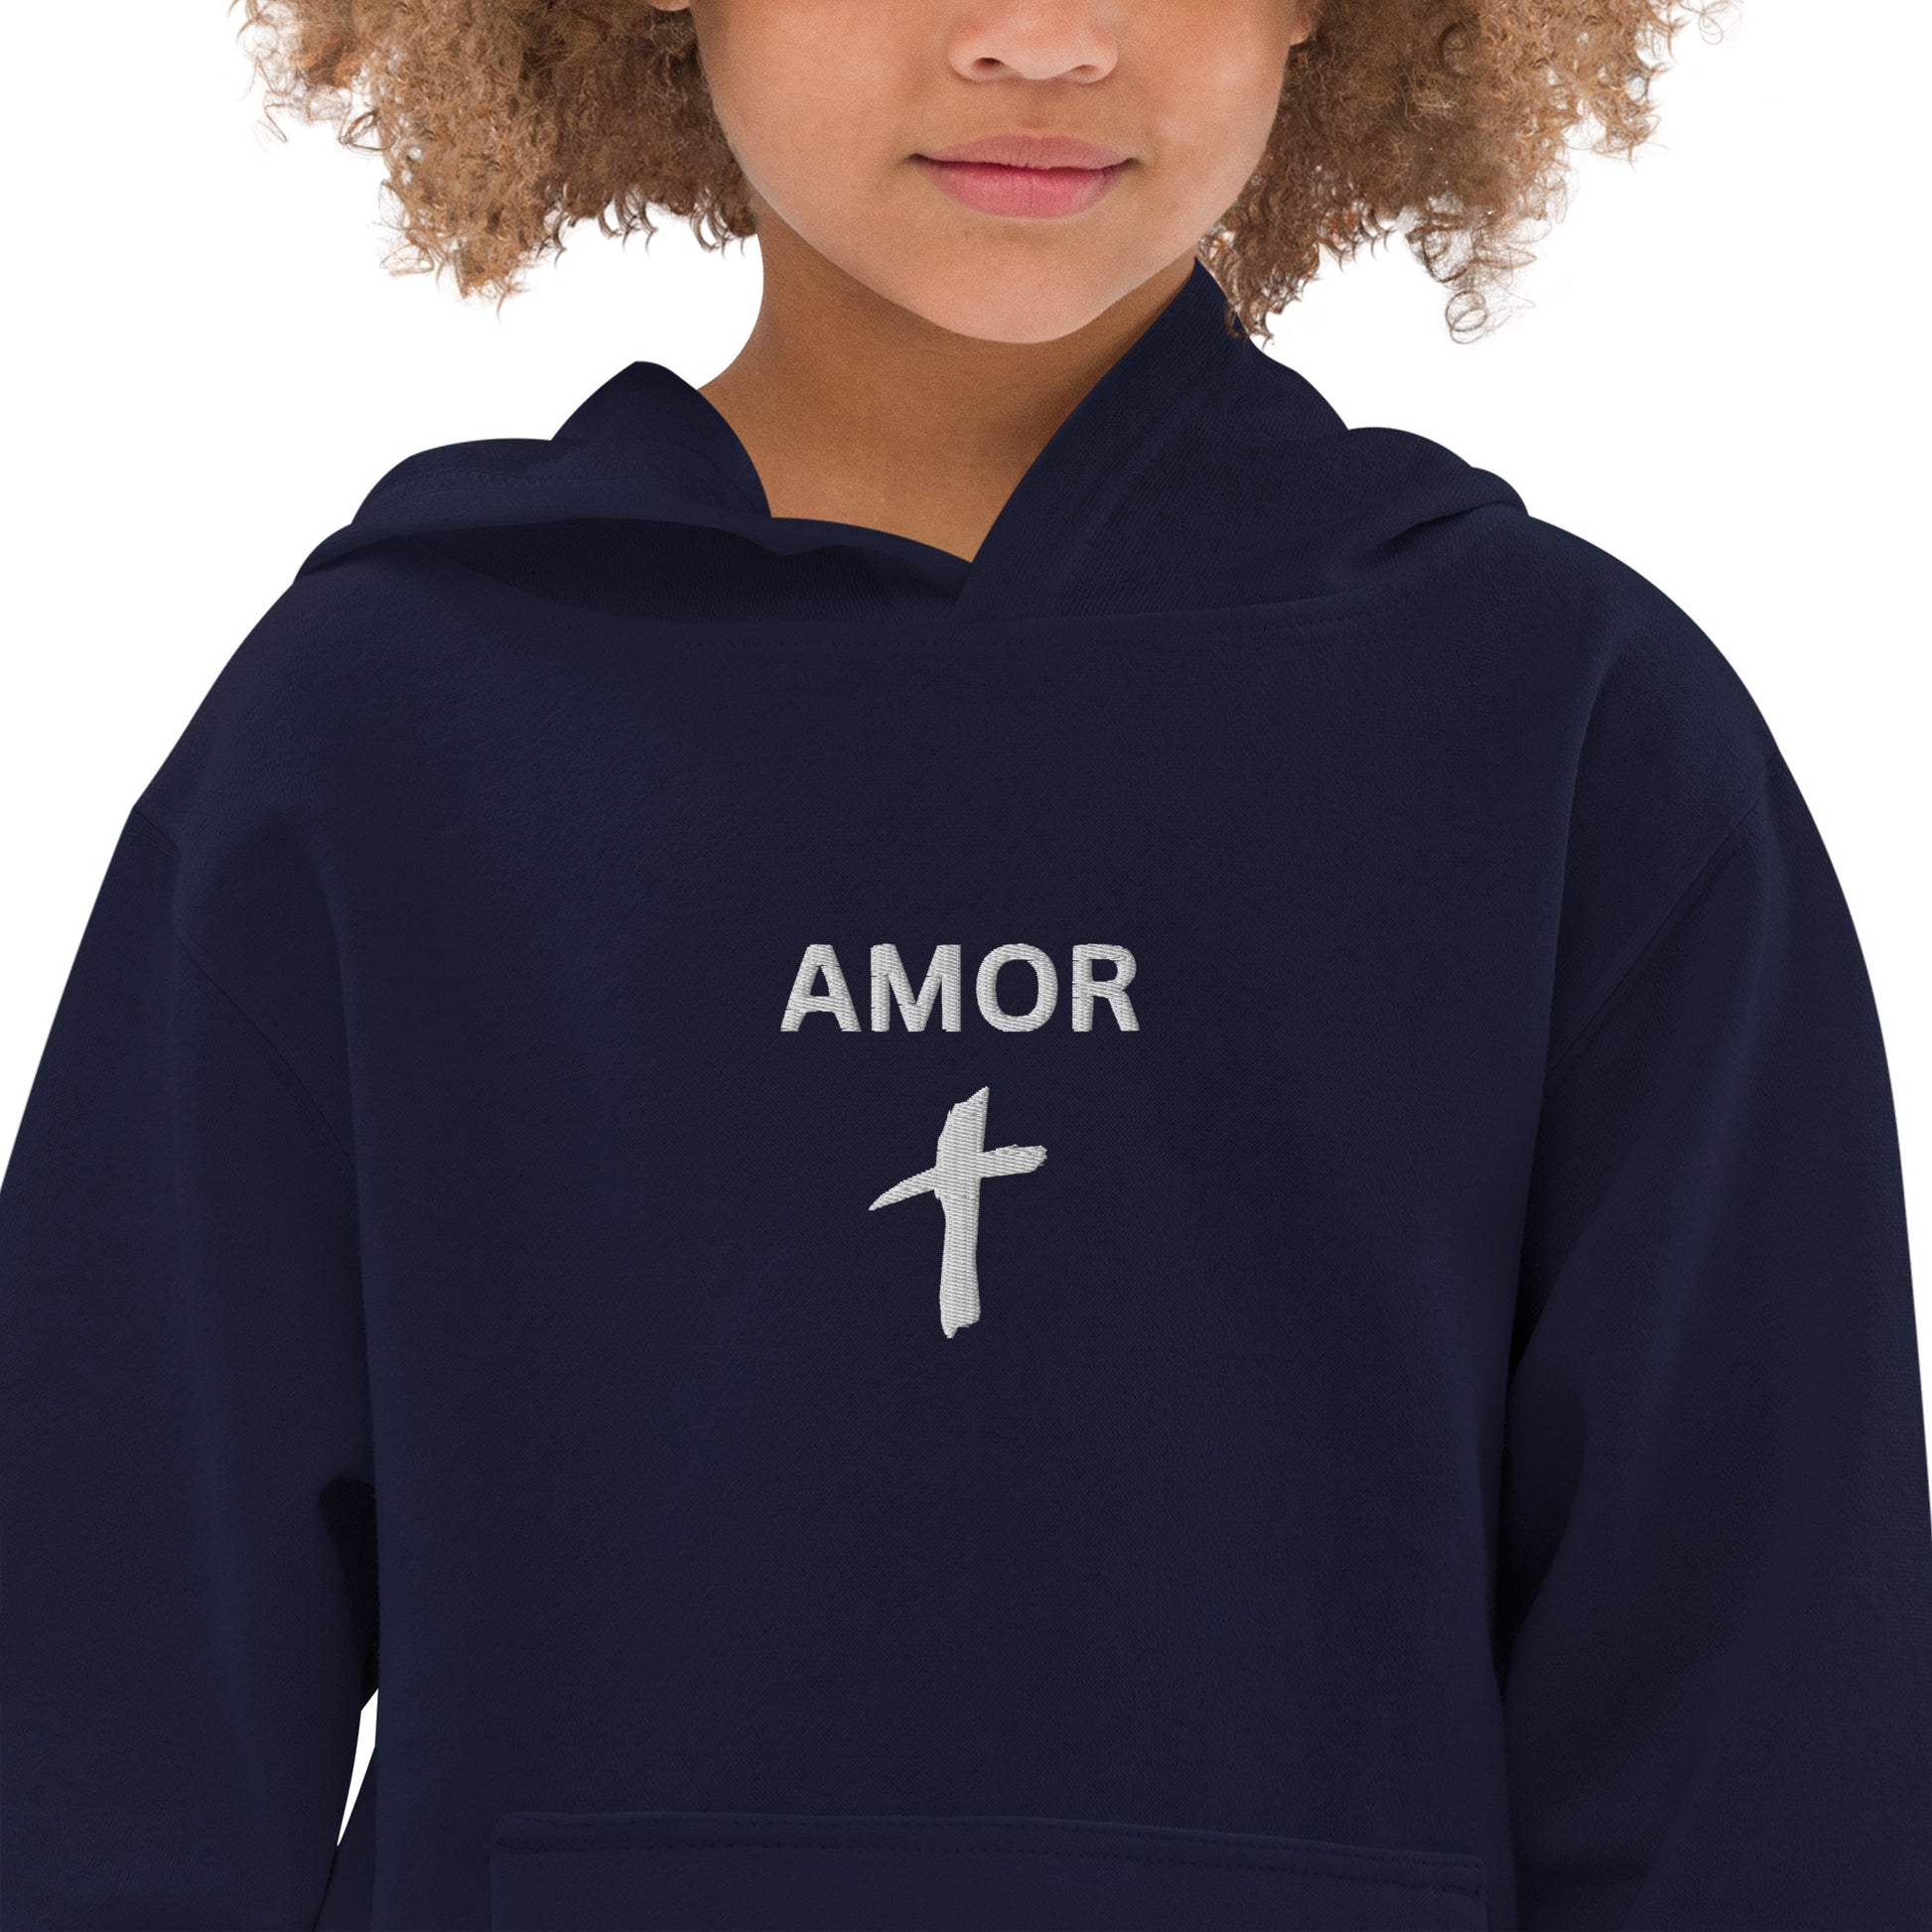 Kids Embroidered "Amor" Fleece Hoodie - Humble & Faithful Co.